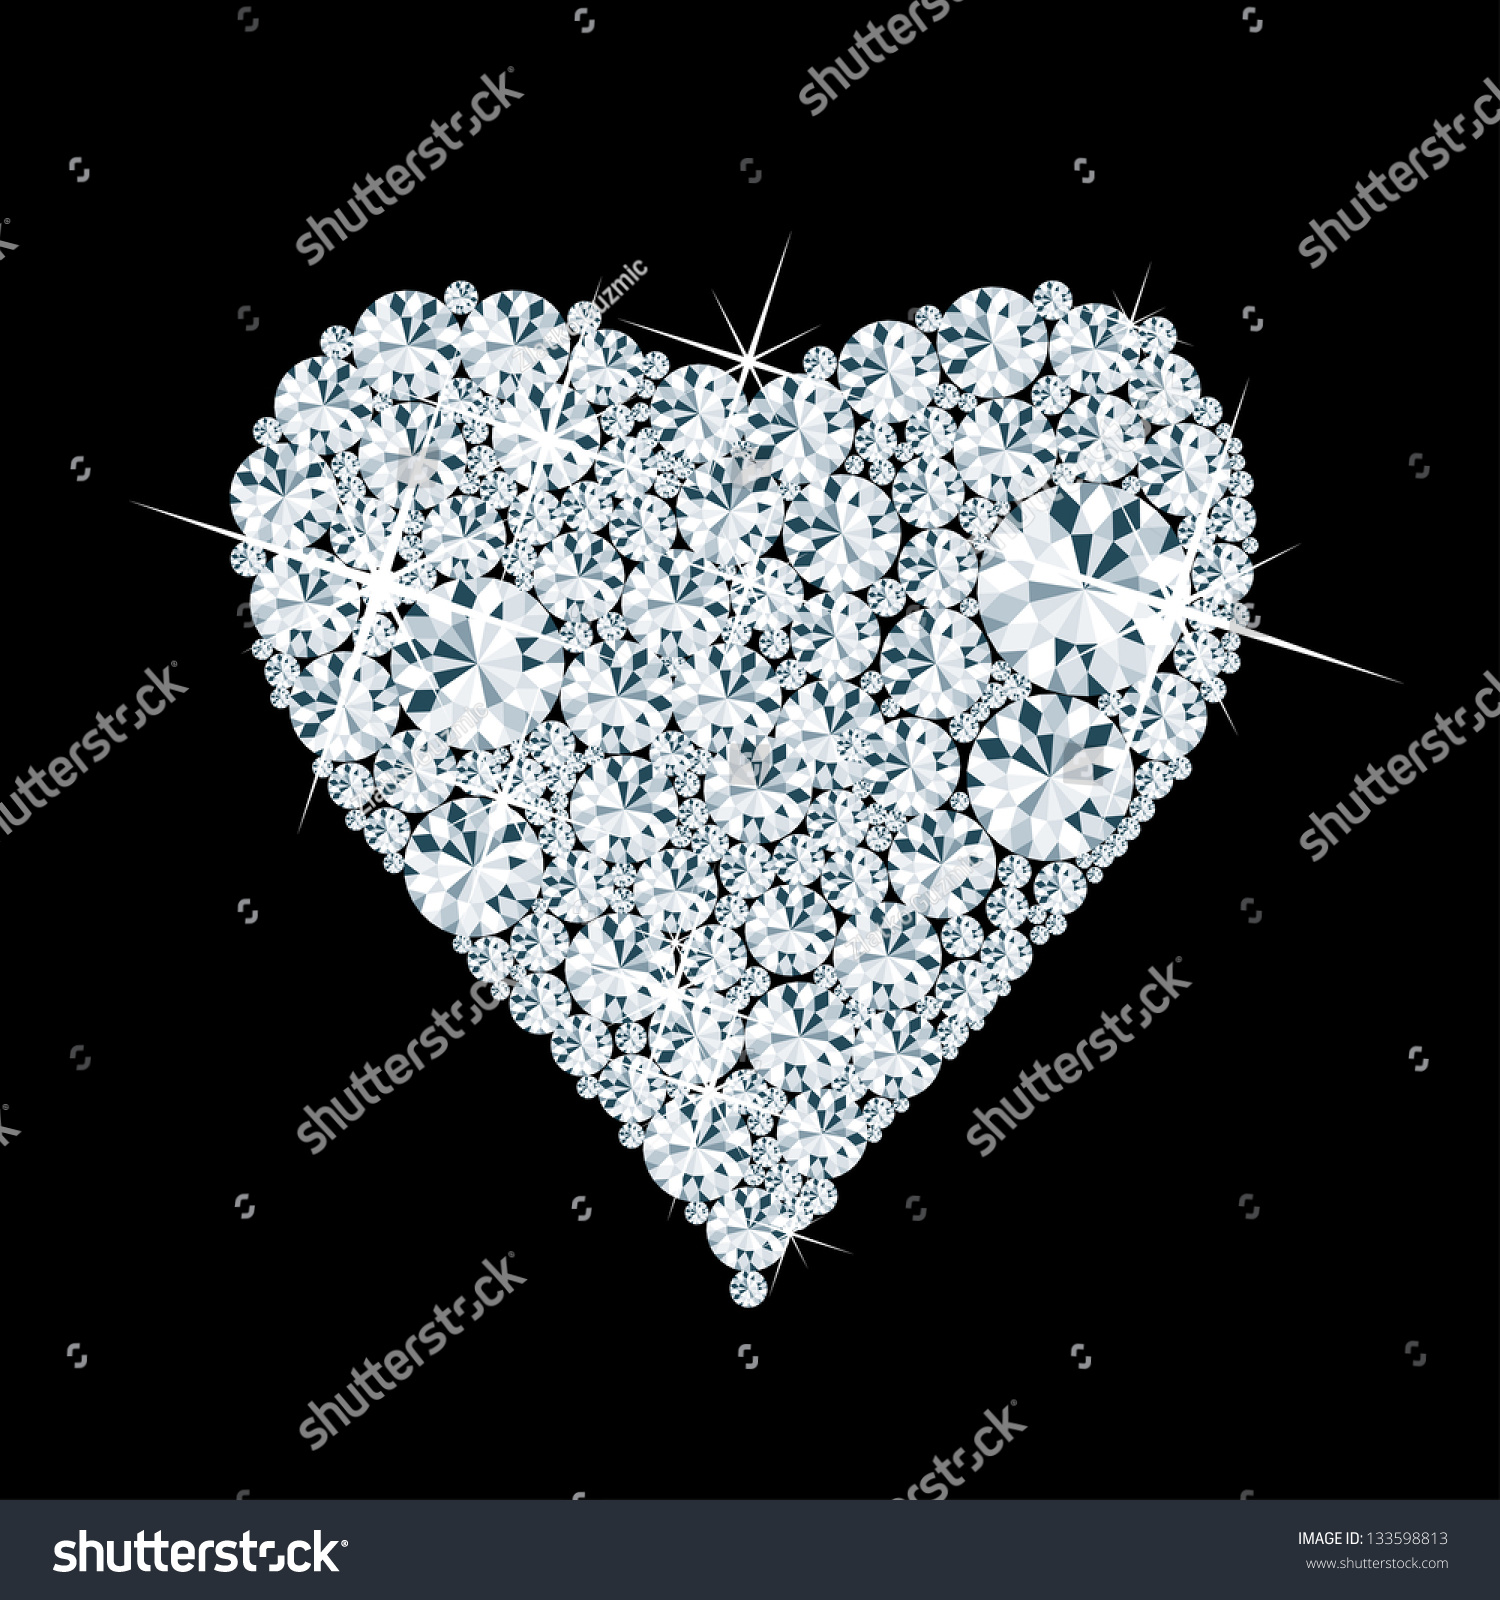 Vector Abstract Diamond Heart On Black Background - 133598813 ...